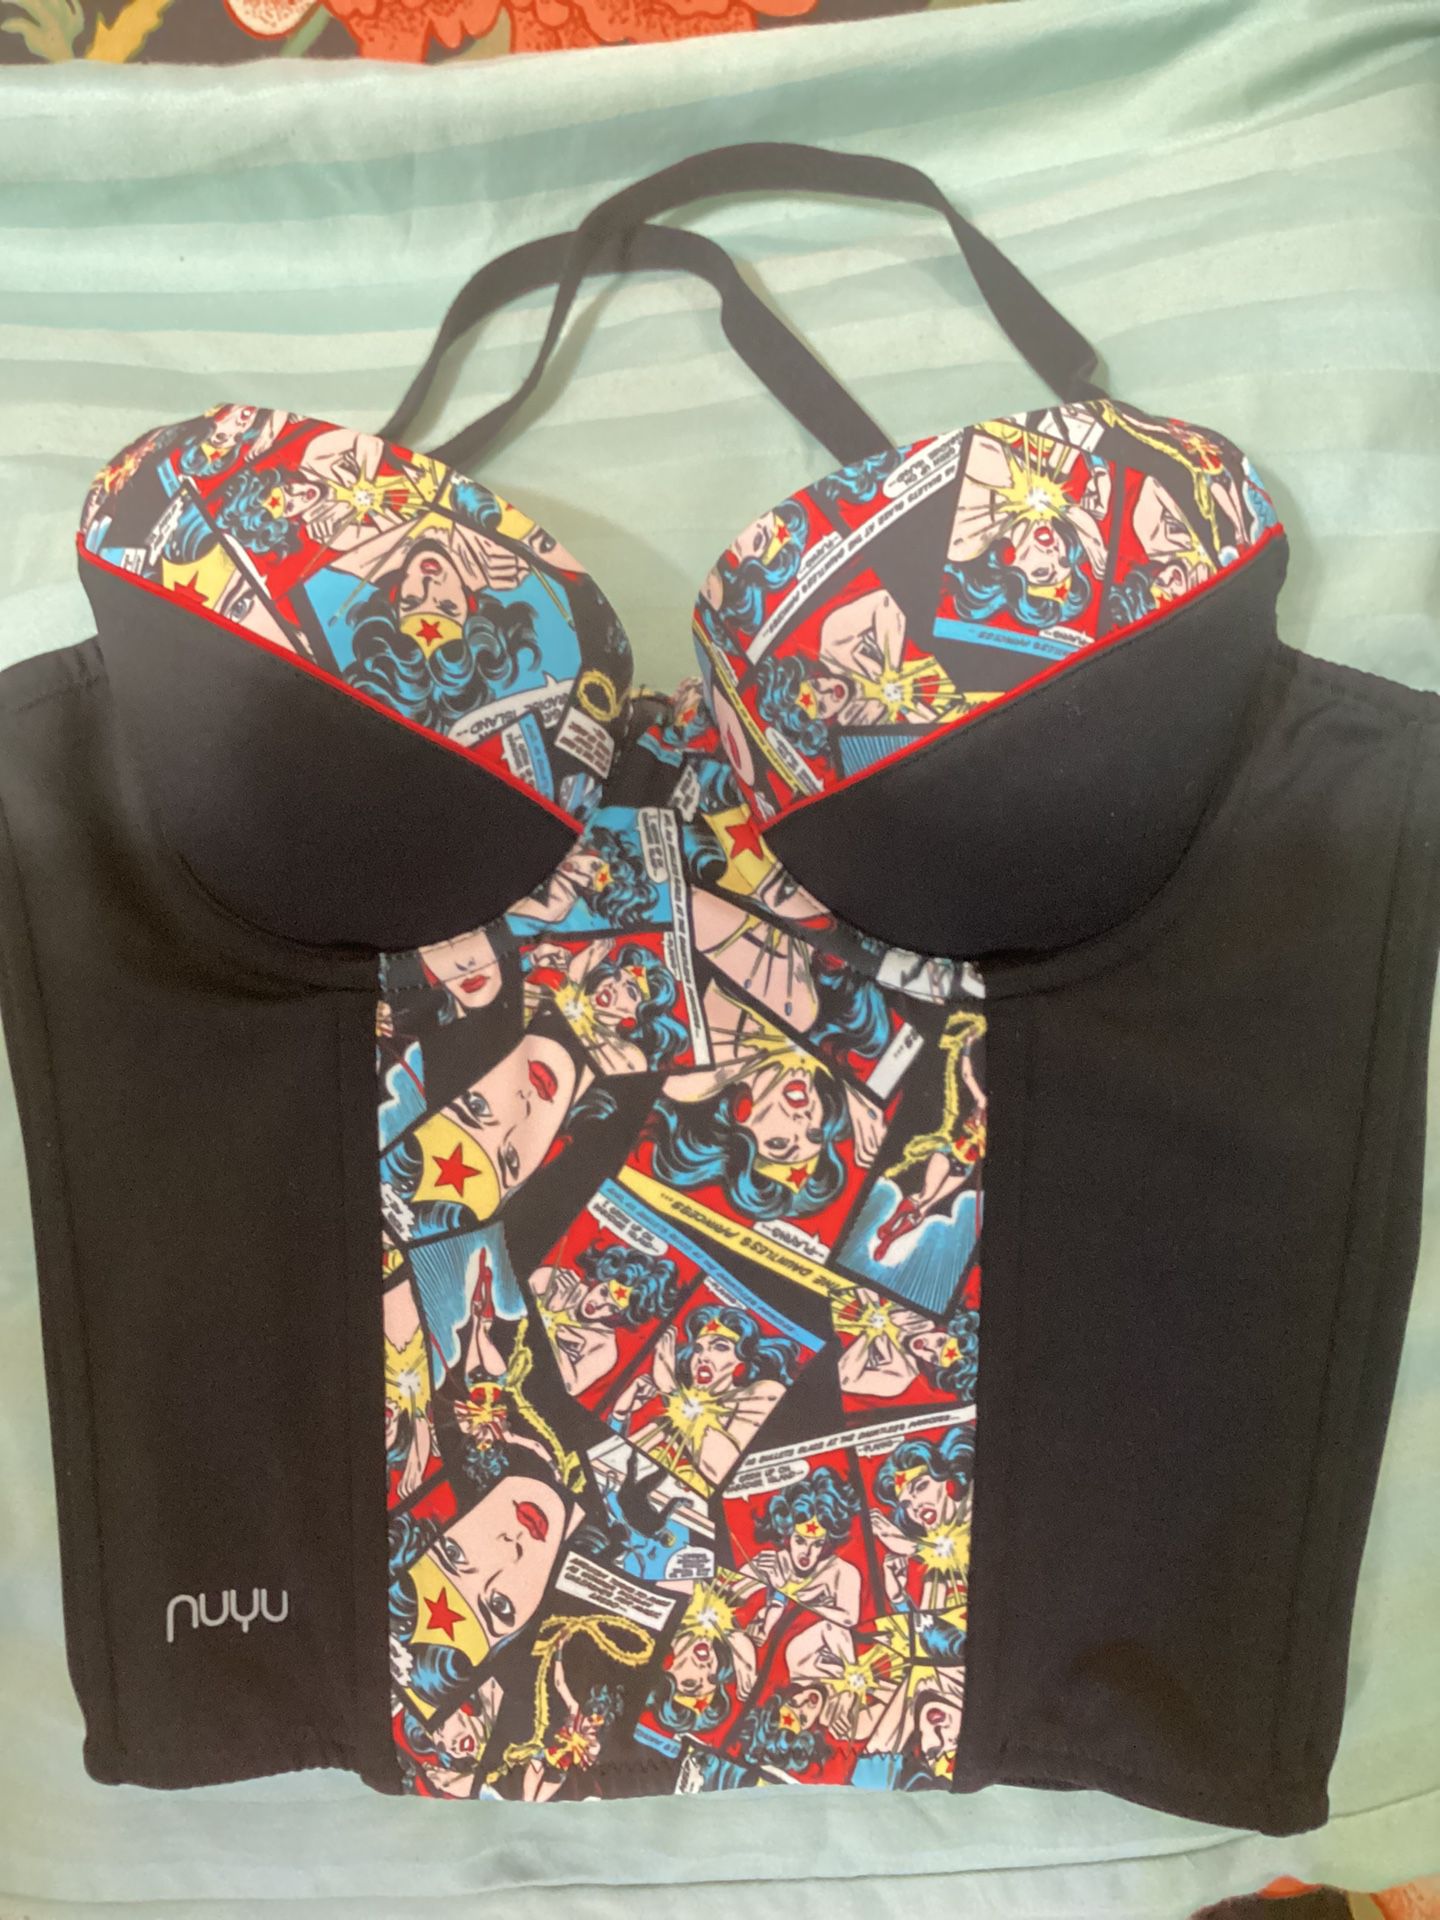 Nuyu collection wonder woman's bra corset NWOT 